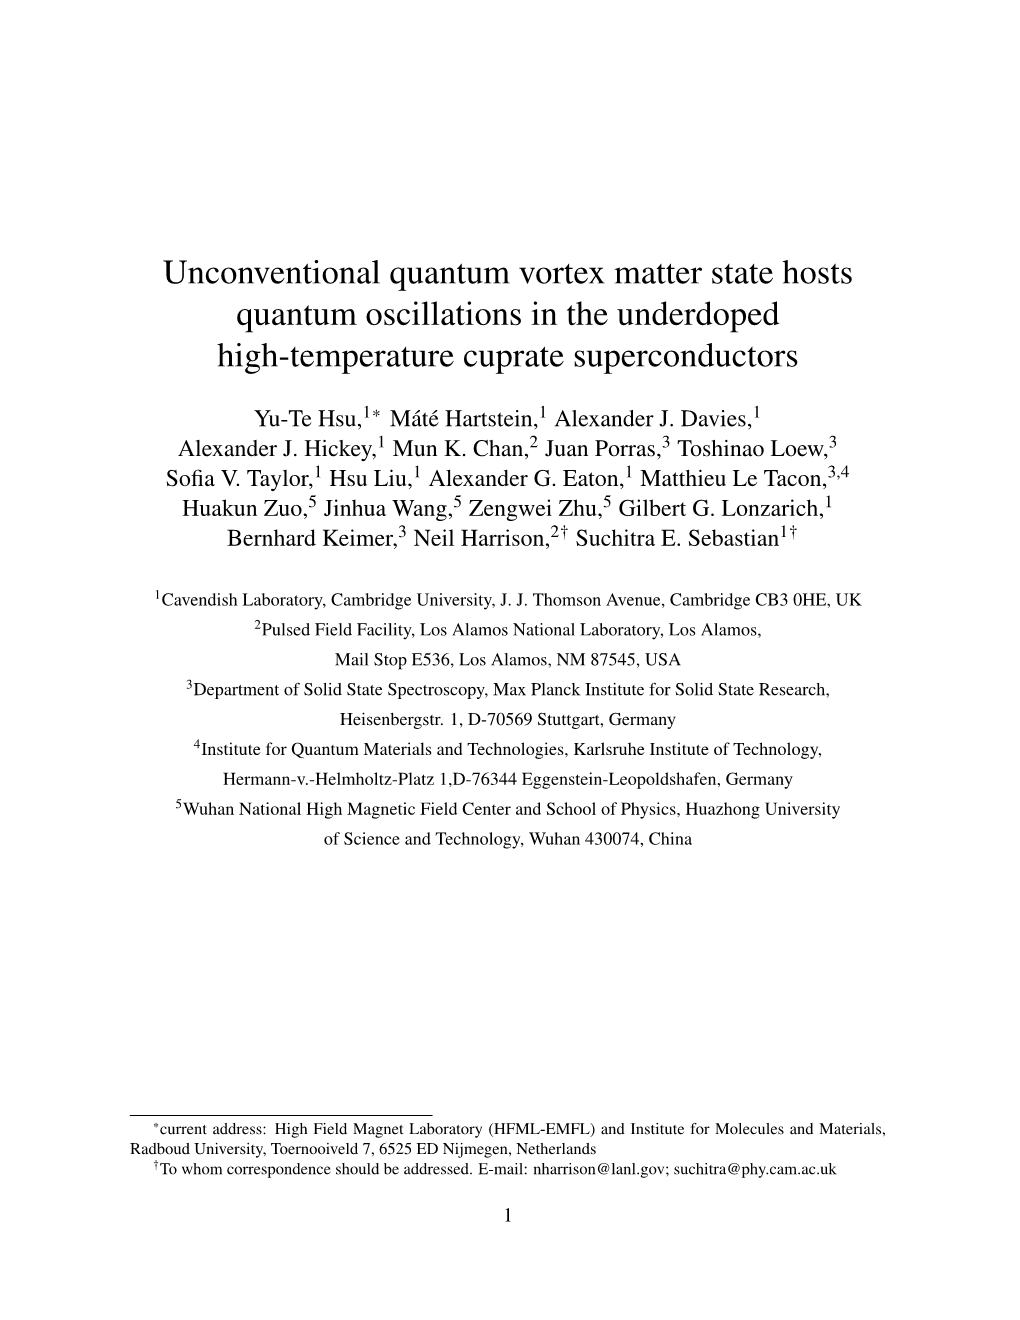 Unconventional Quantum Vortex Matter State Hosts Quantum Oscillations in the Underdoped High-Temperature Cuprate Superconductors